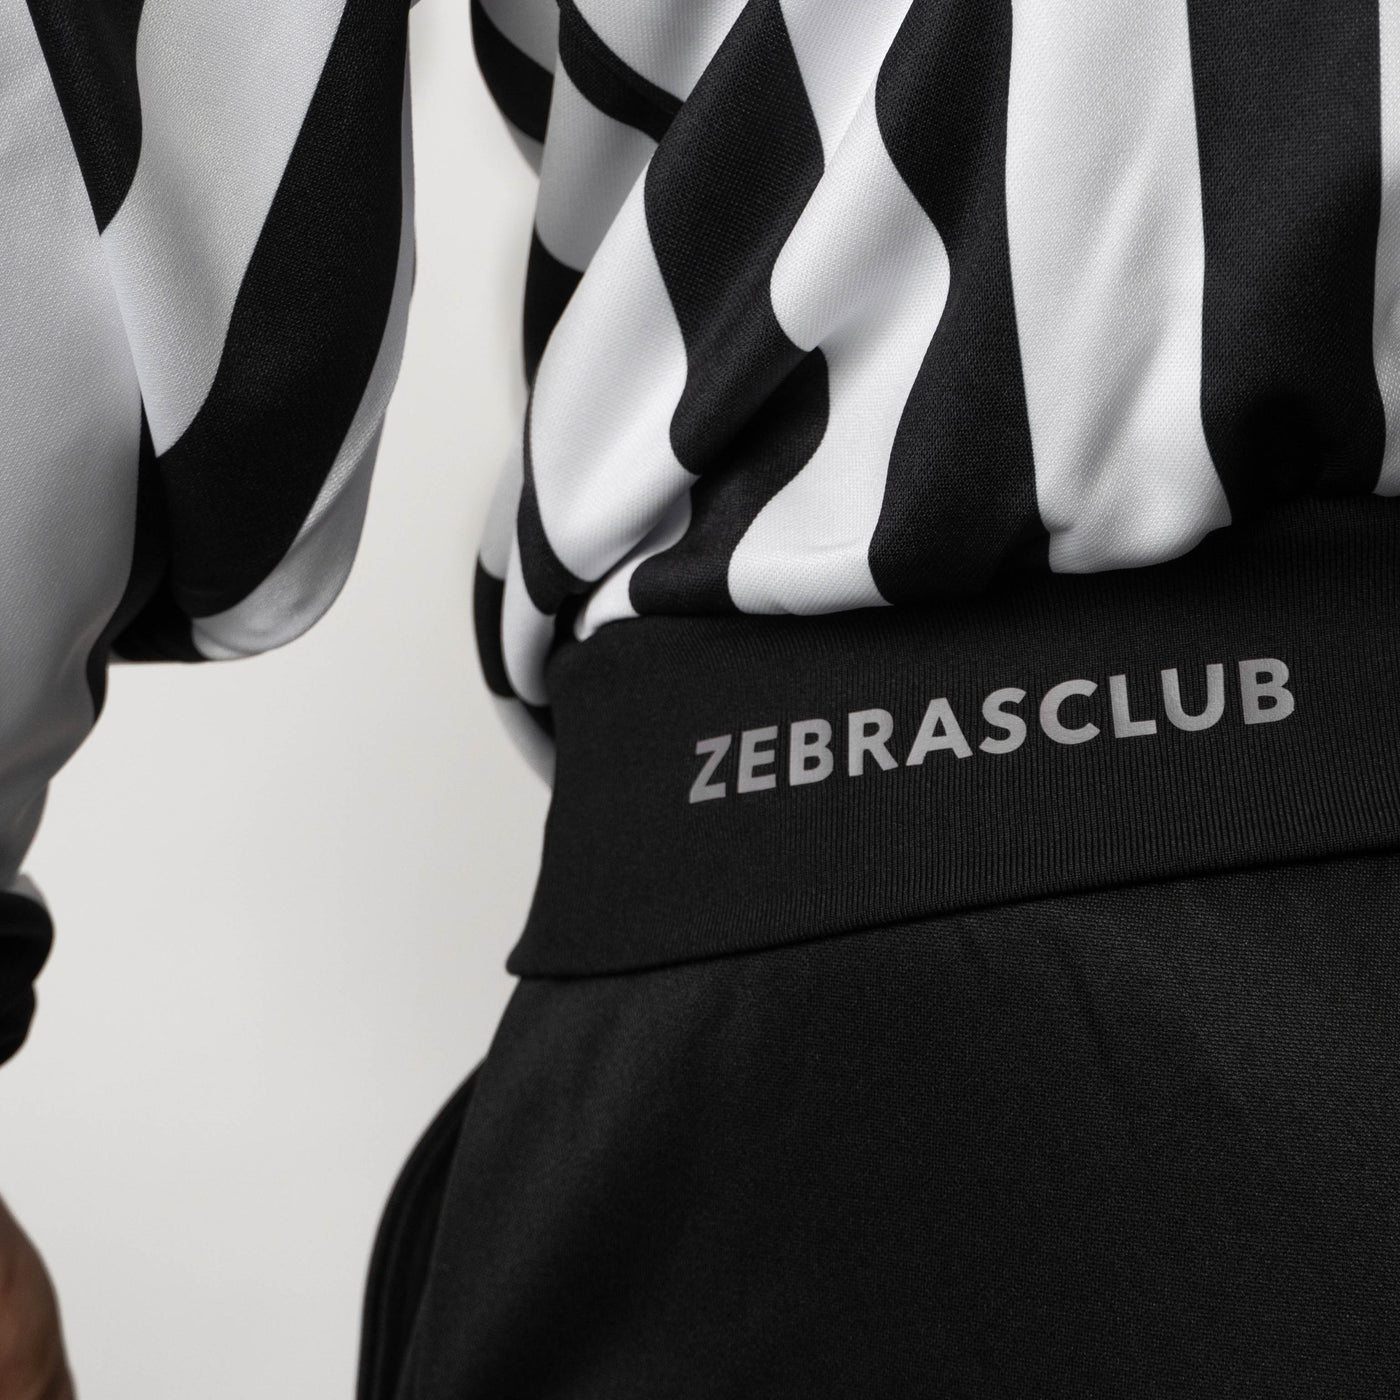 Zebrasclub ZL1 hockey referee jersey with snaps logo on waistband